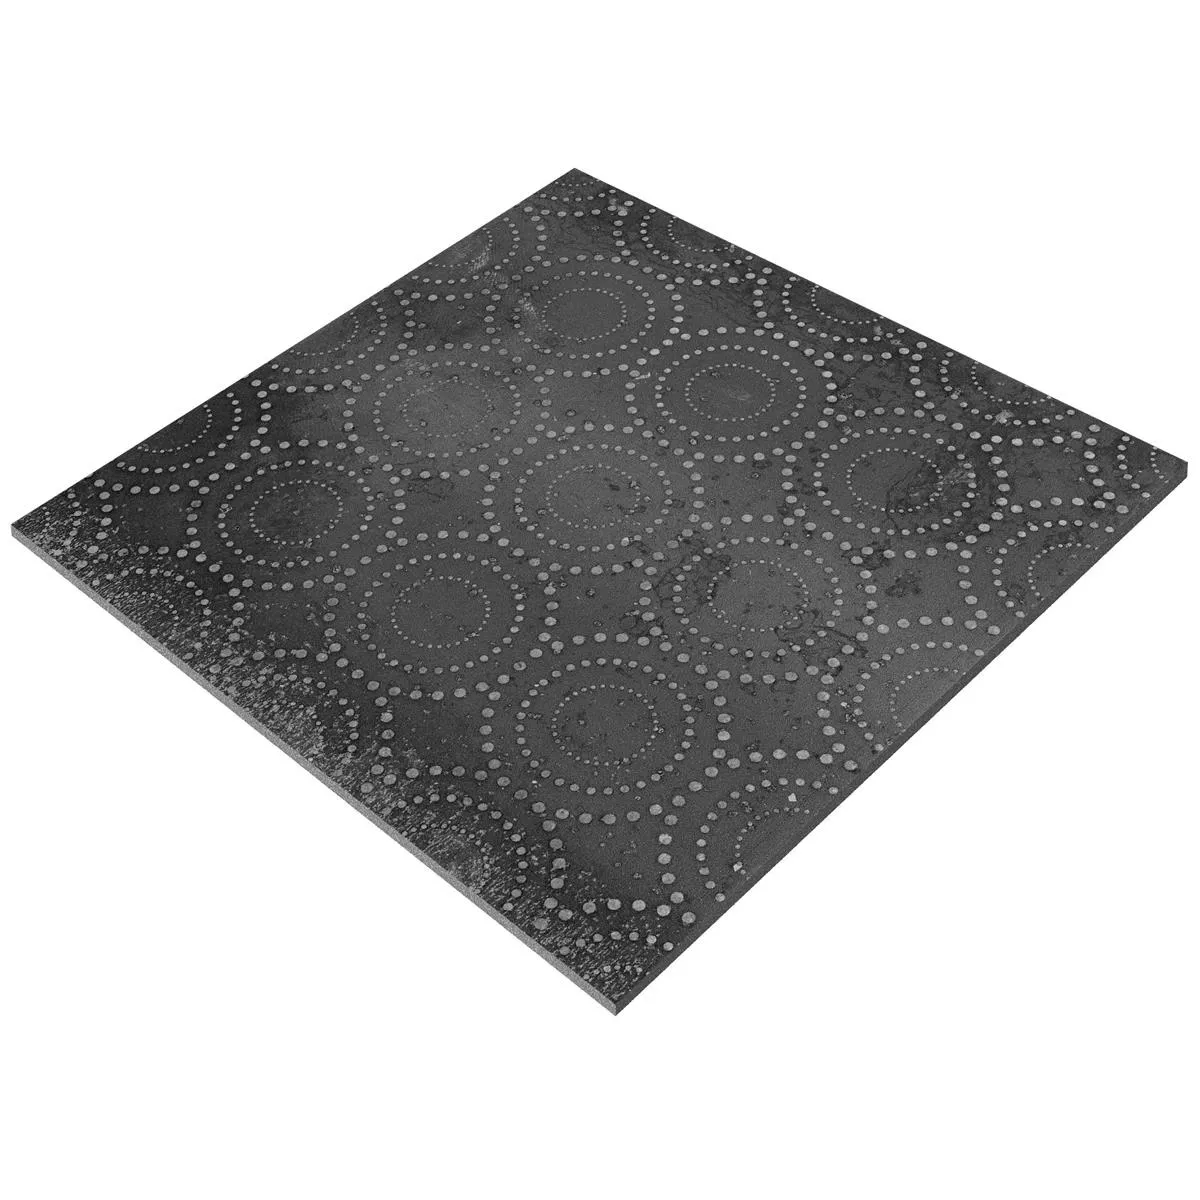 Gresie Chicago Aspect Metalic Antracit R9 - 18,5x18,5cm Pattern 4